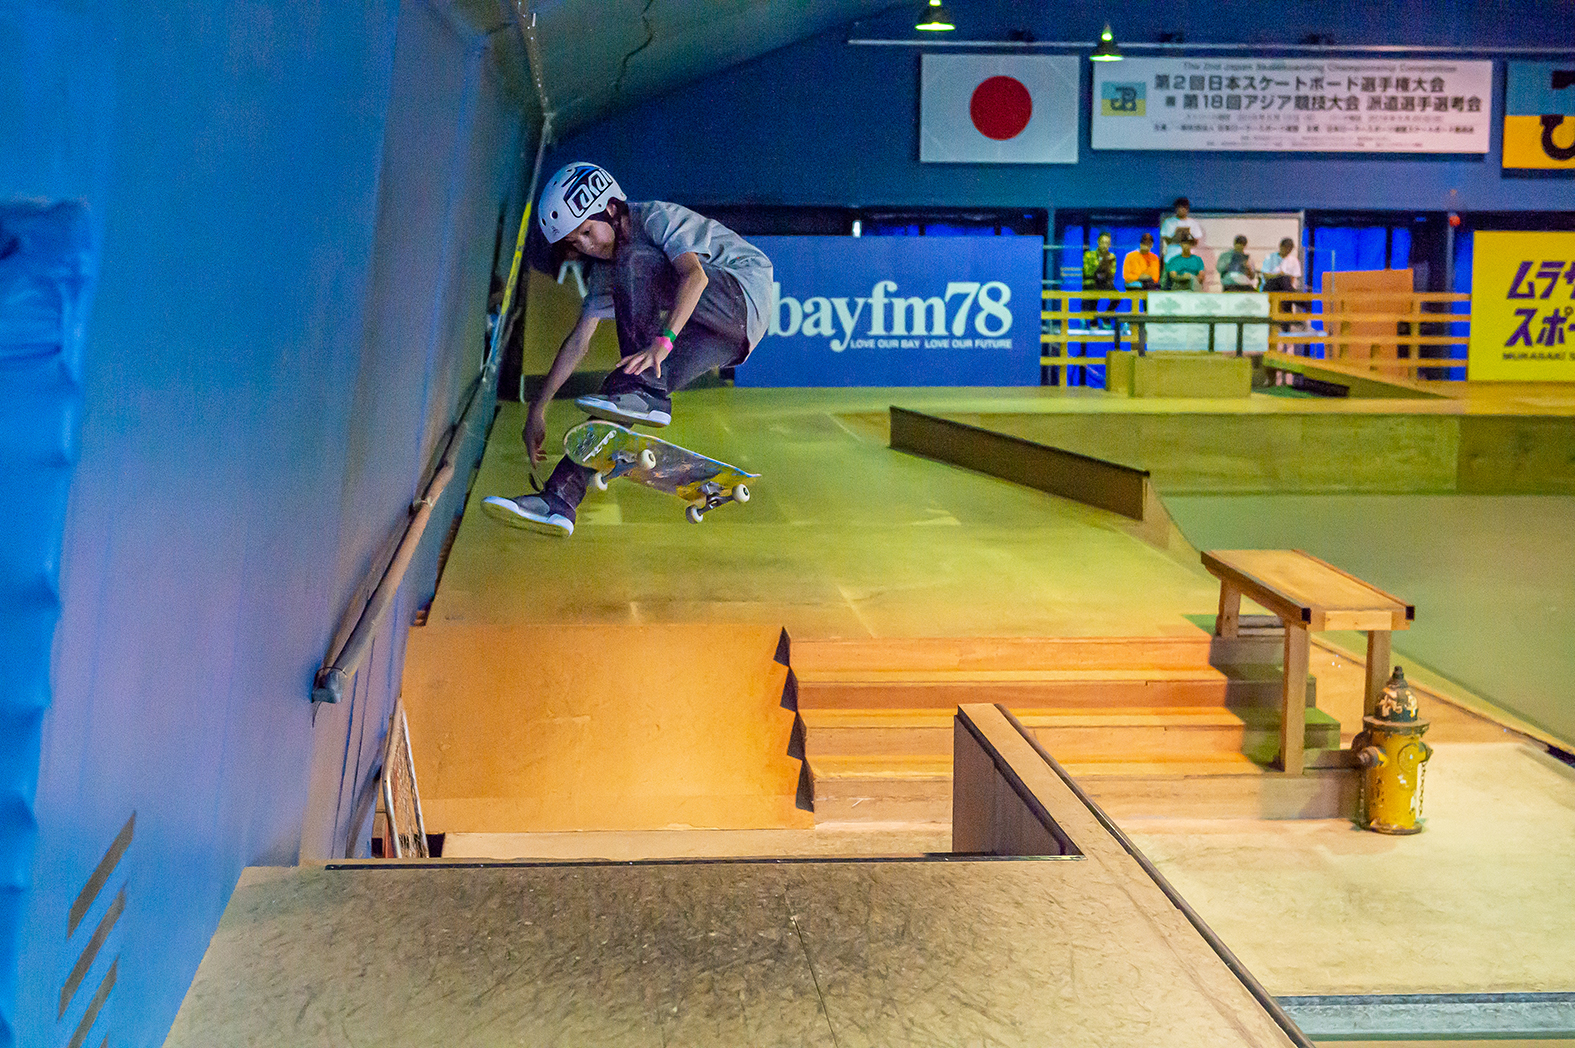 13-year-old Yamashita at the 2nd All Japan Skateboarding Championship in 2018